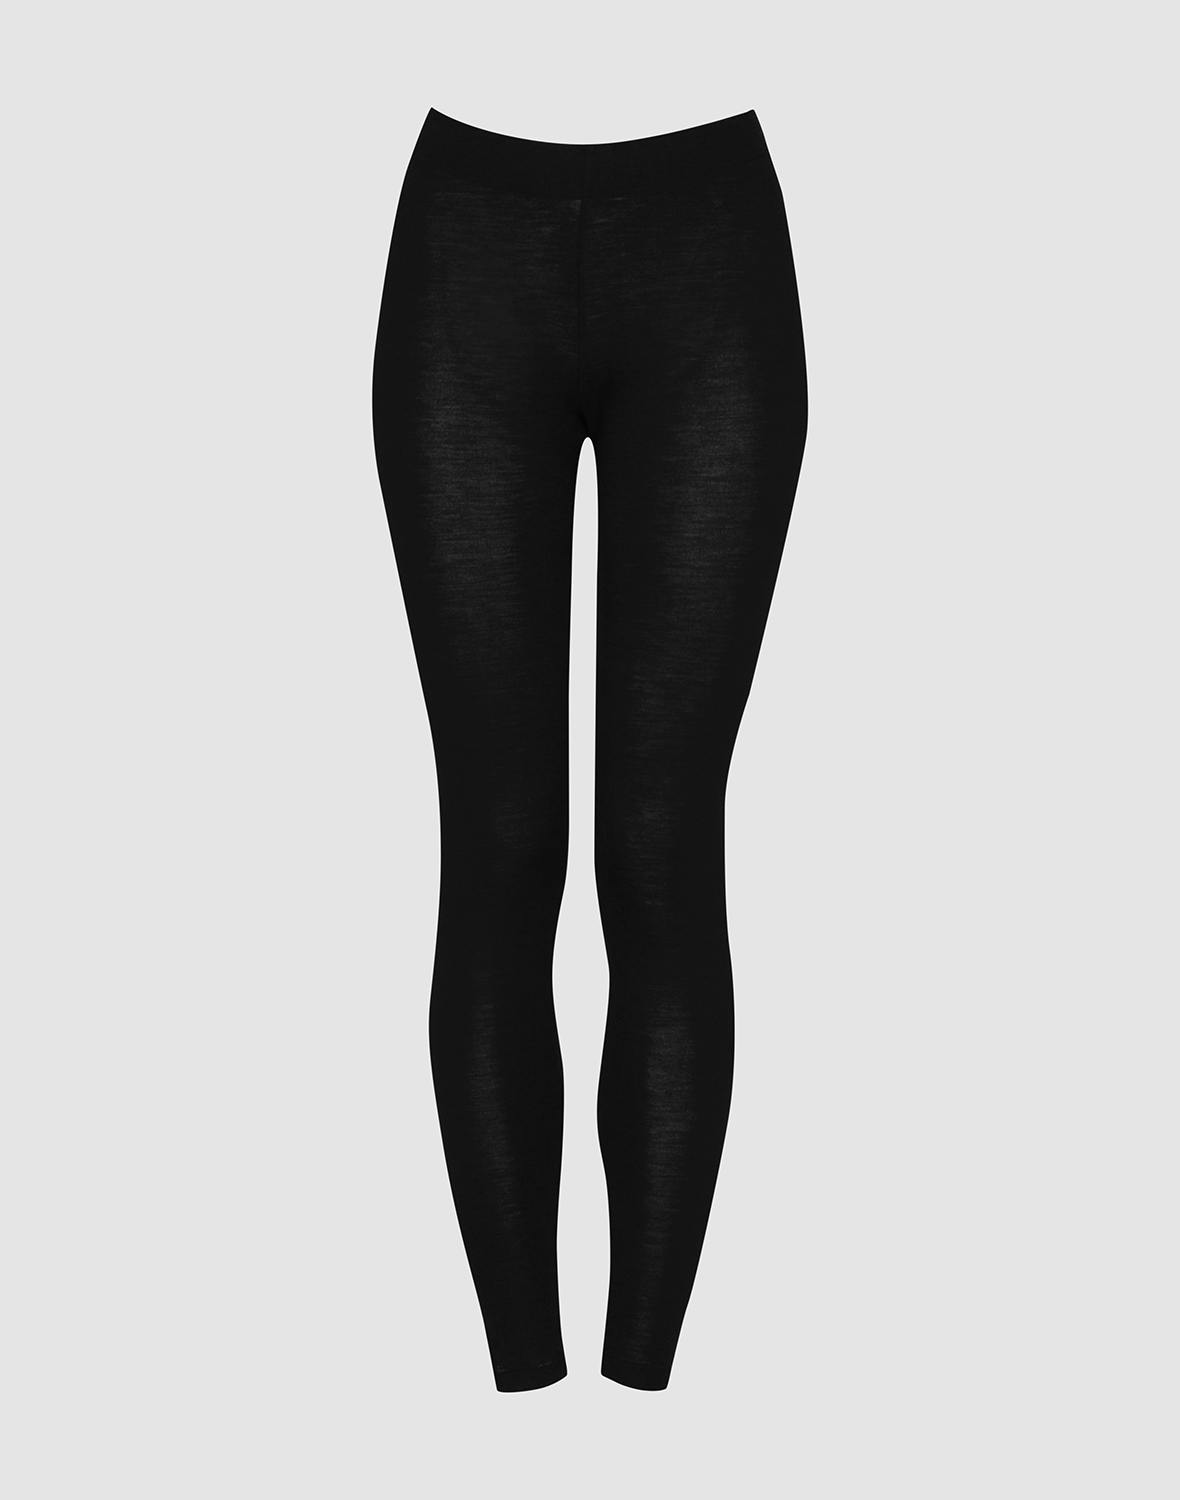 Women's merino wool/silk leggings - Black - Dilling